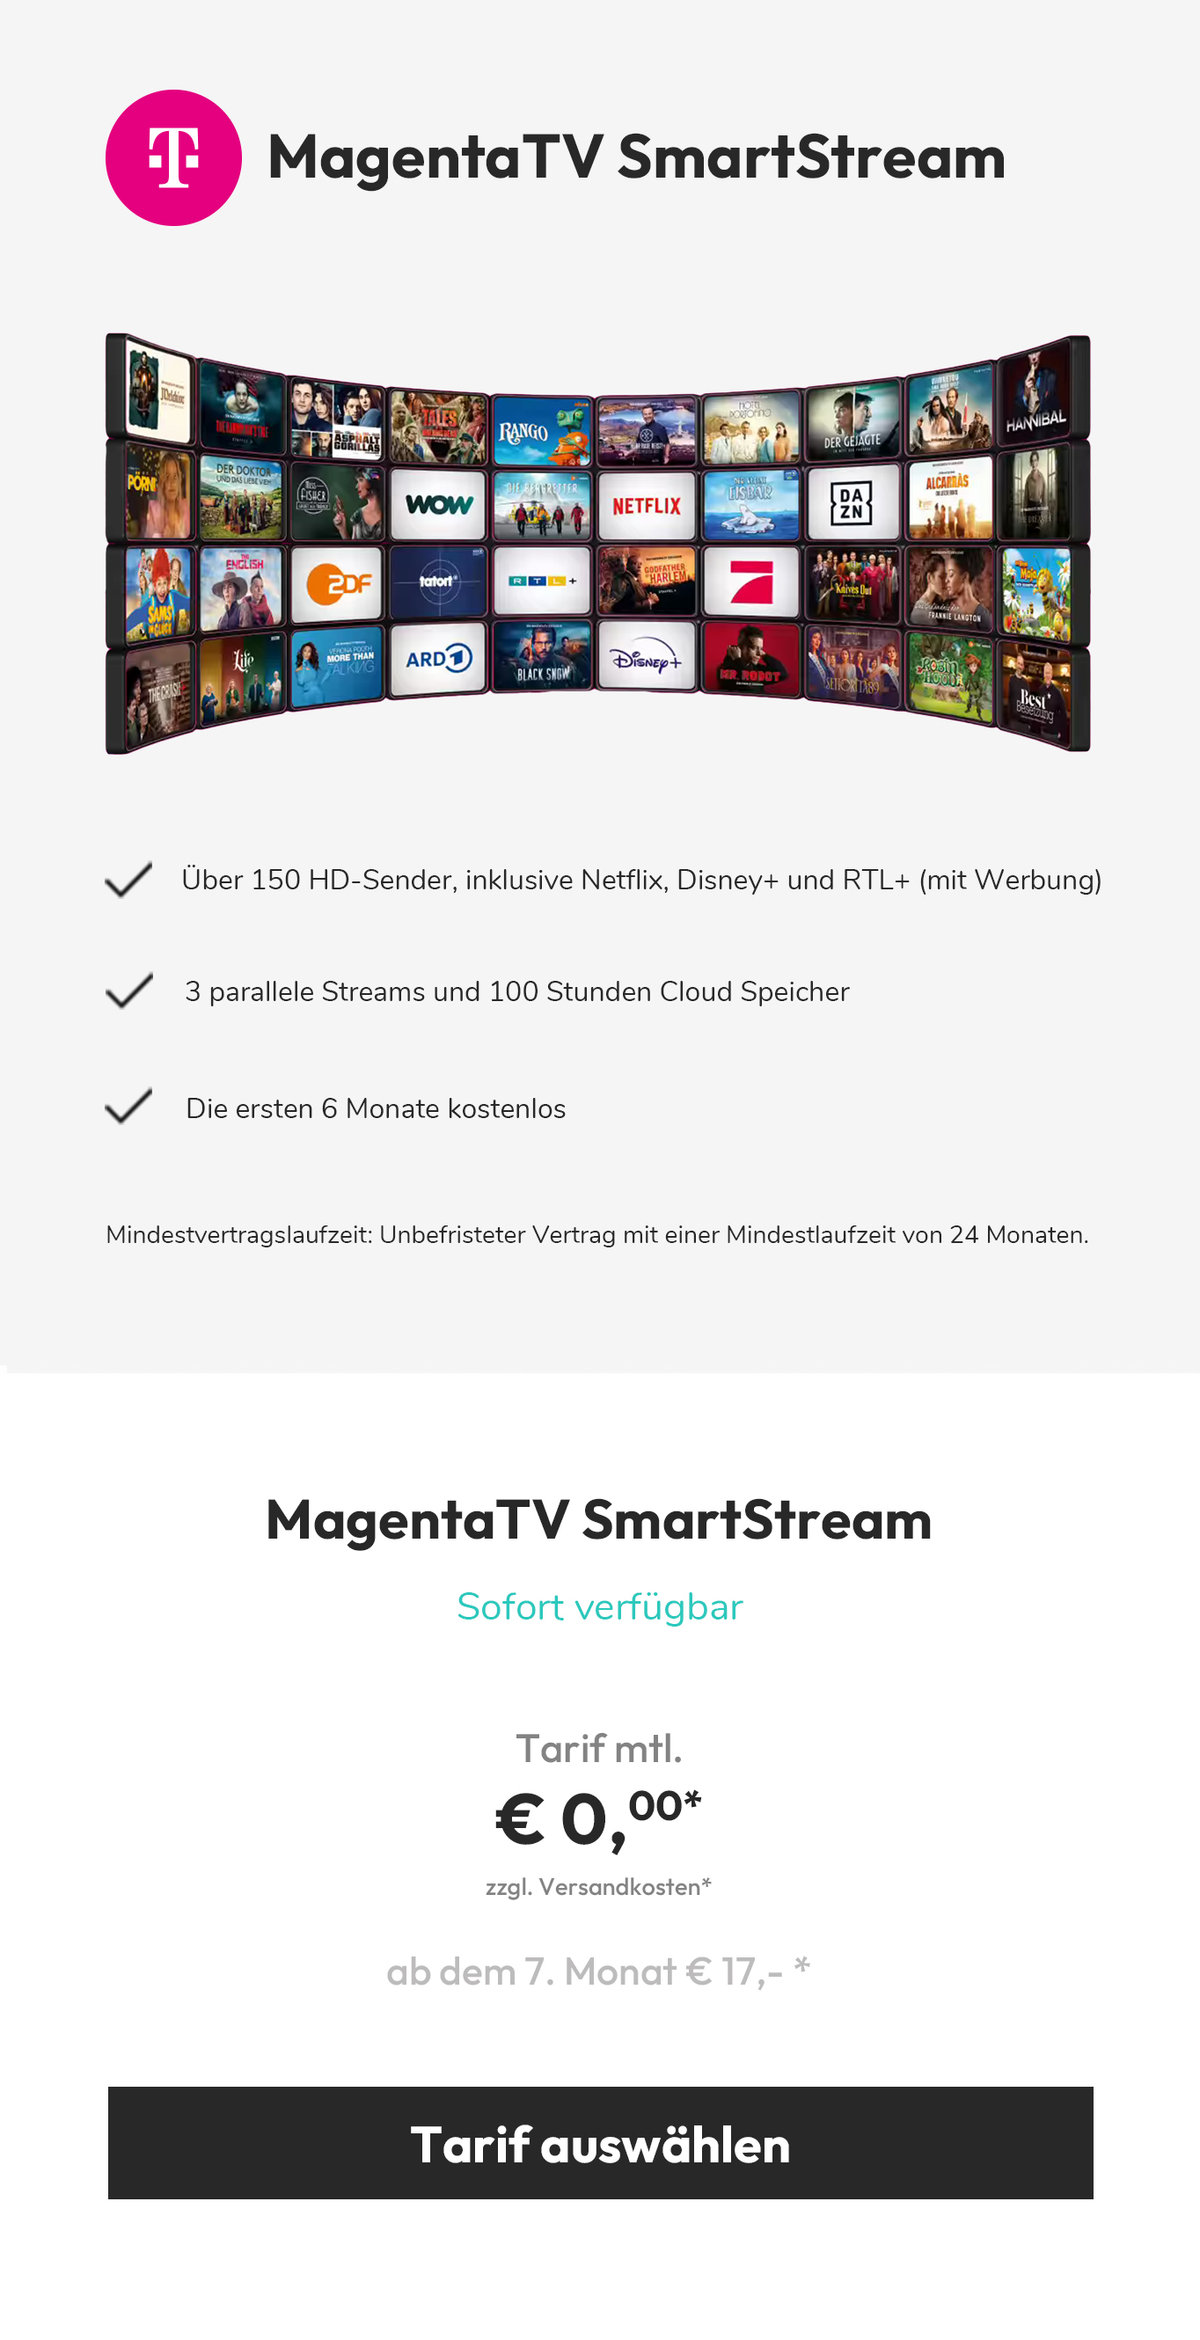 MagentaTV SmartStream